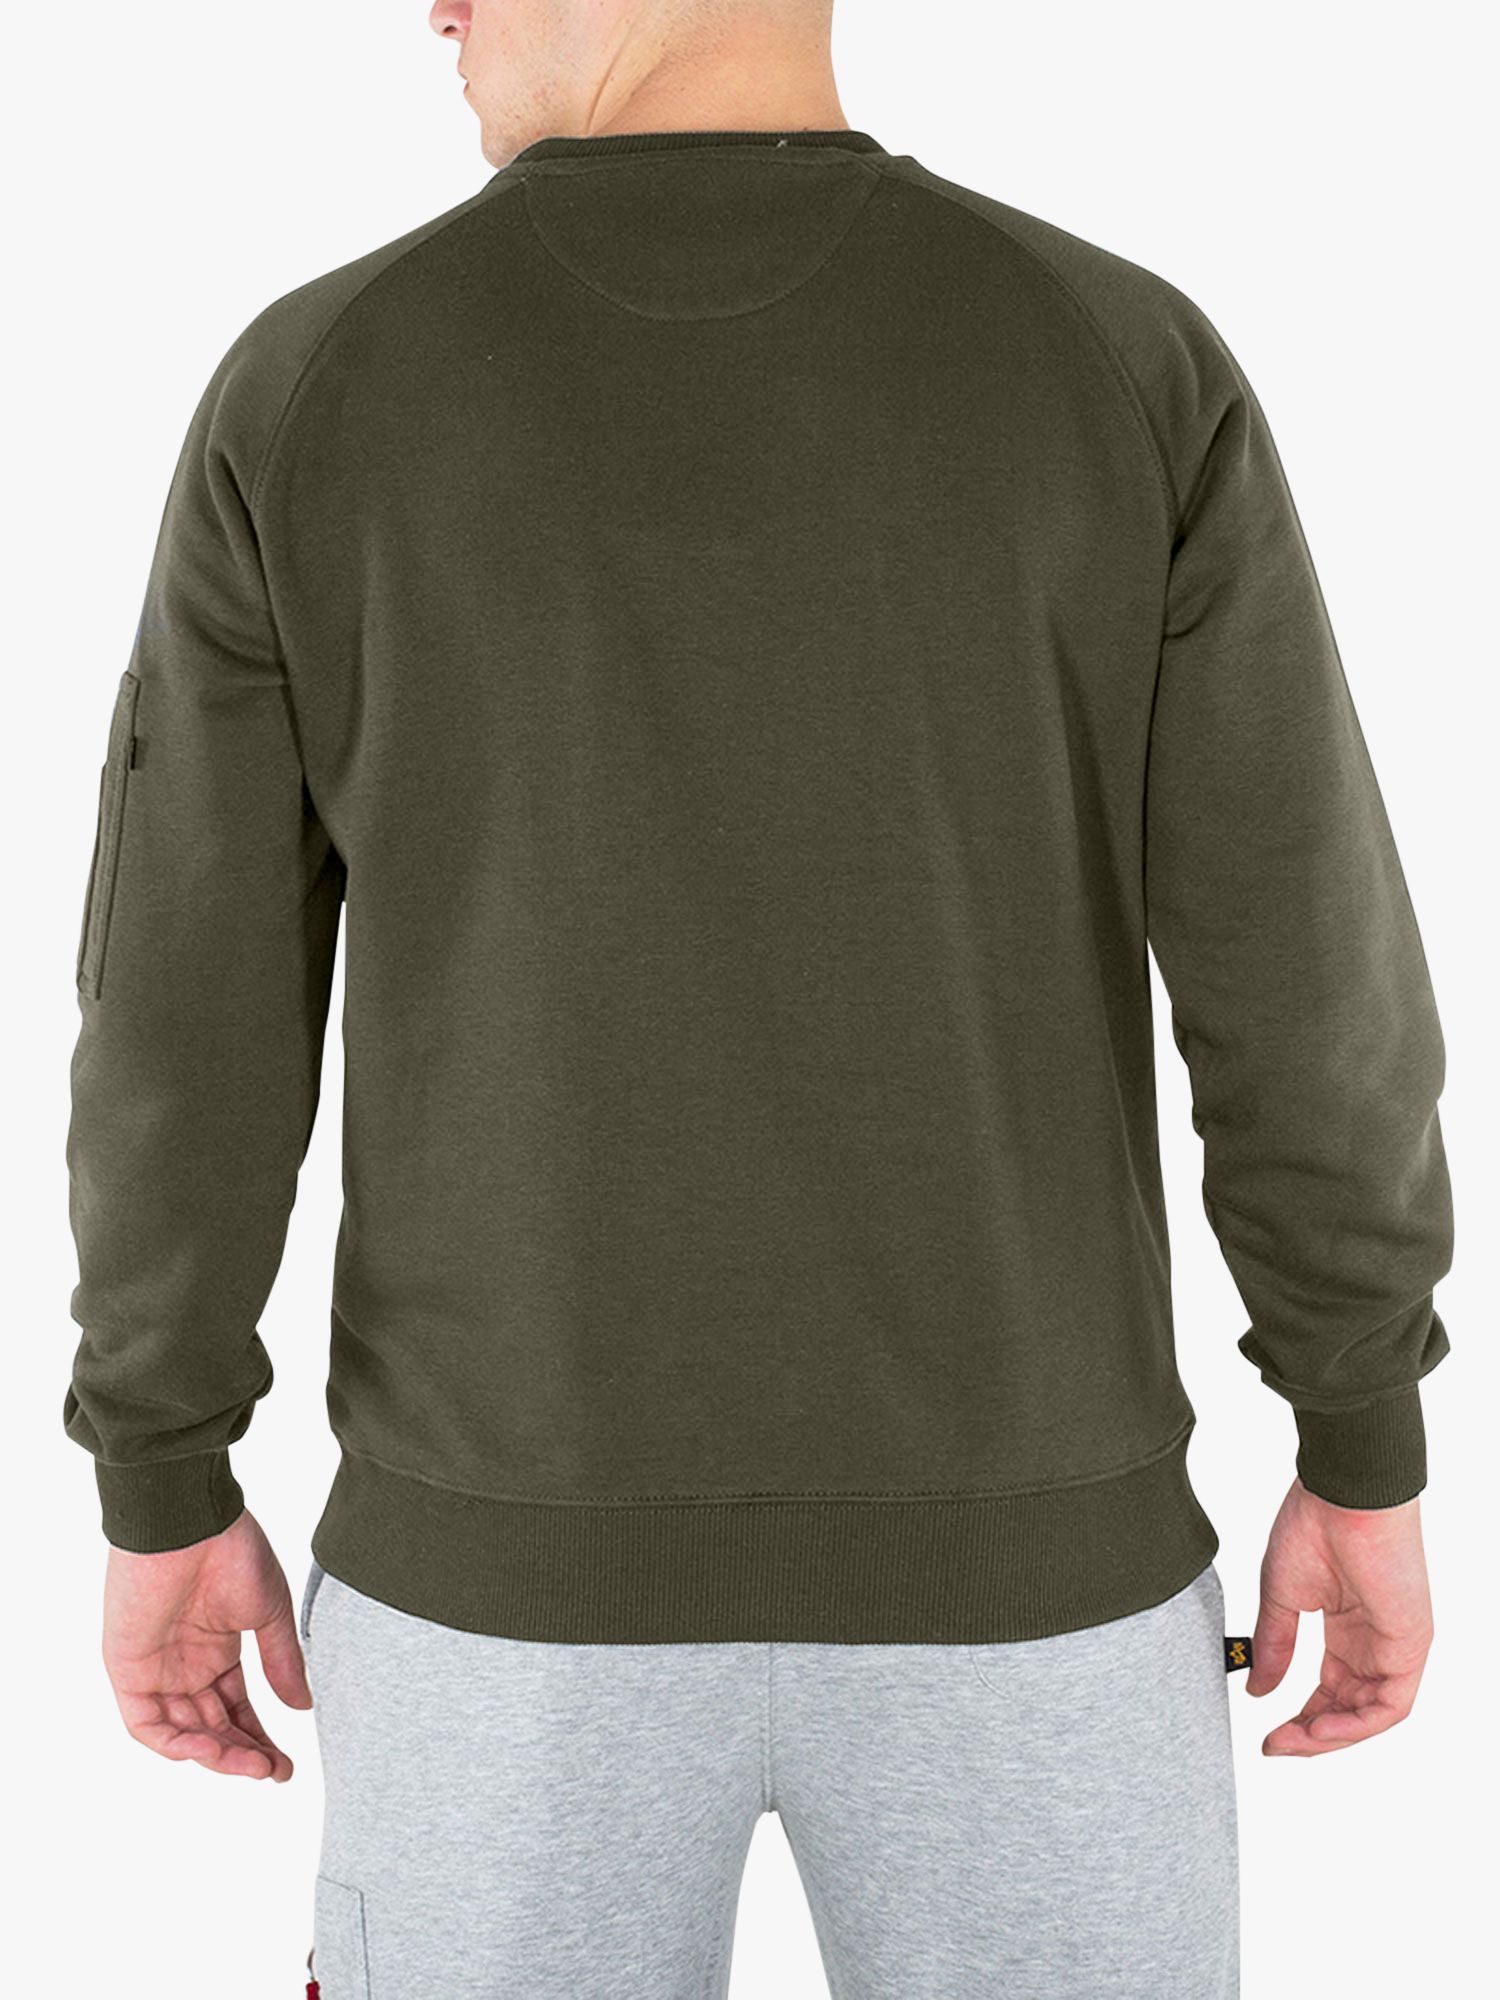 Alpha Industries X-Fit Zip John Pocket Dark & Lewis Partners Sweatshirt, 257 Sleeve at Green